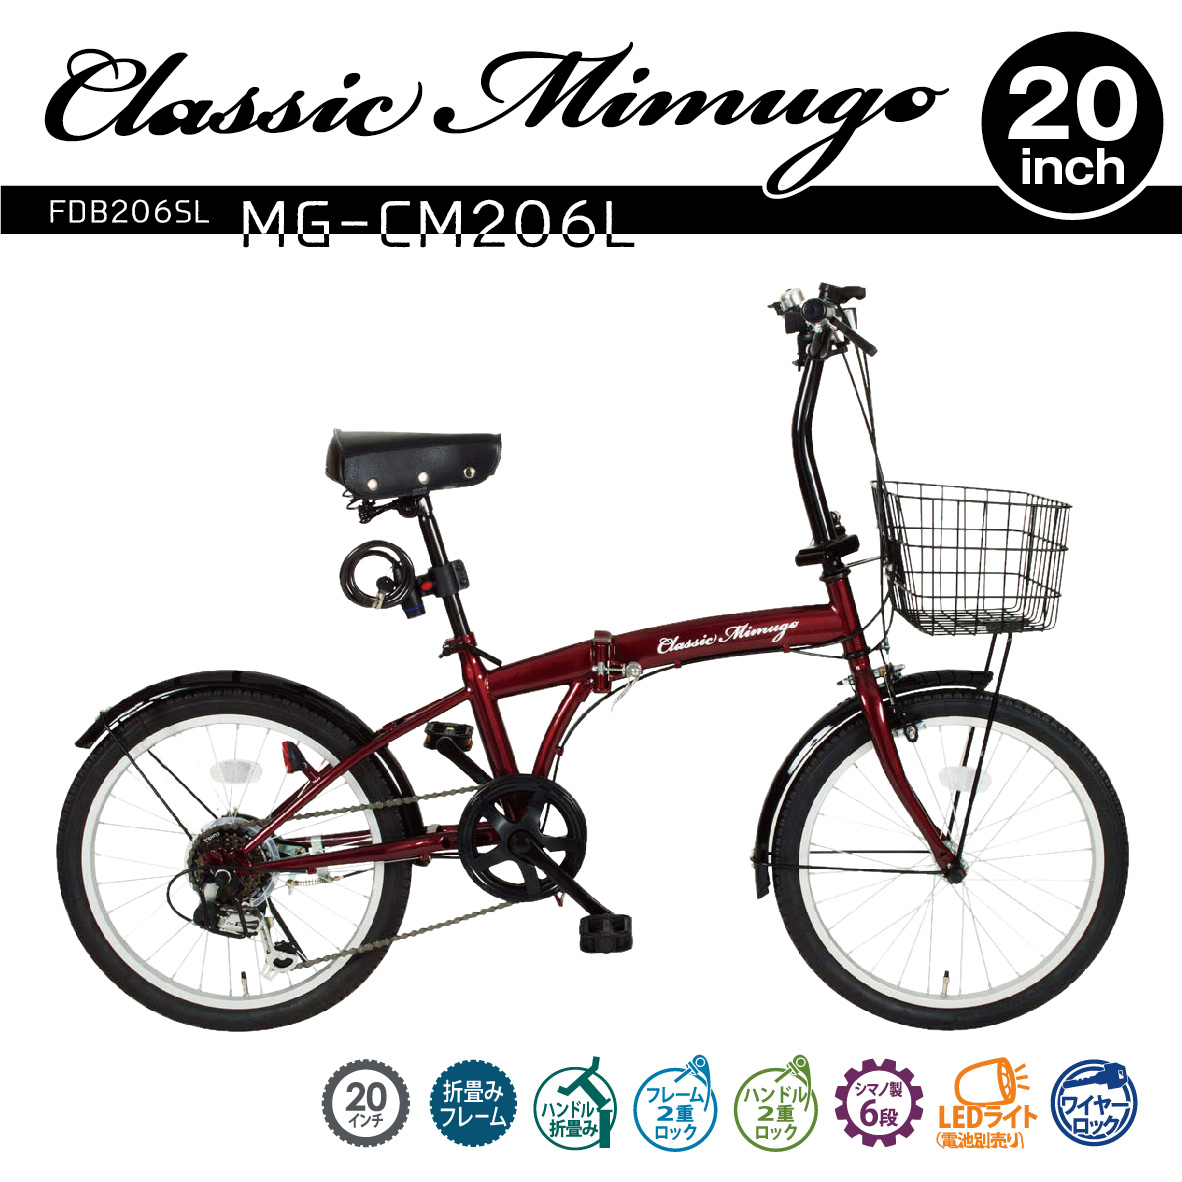 Classic Mimugo 20インチ 折りたたみ自転車 6段変速 FDB206SL	MG-CM206L